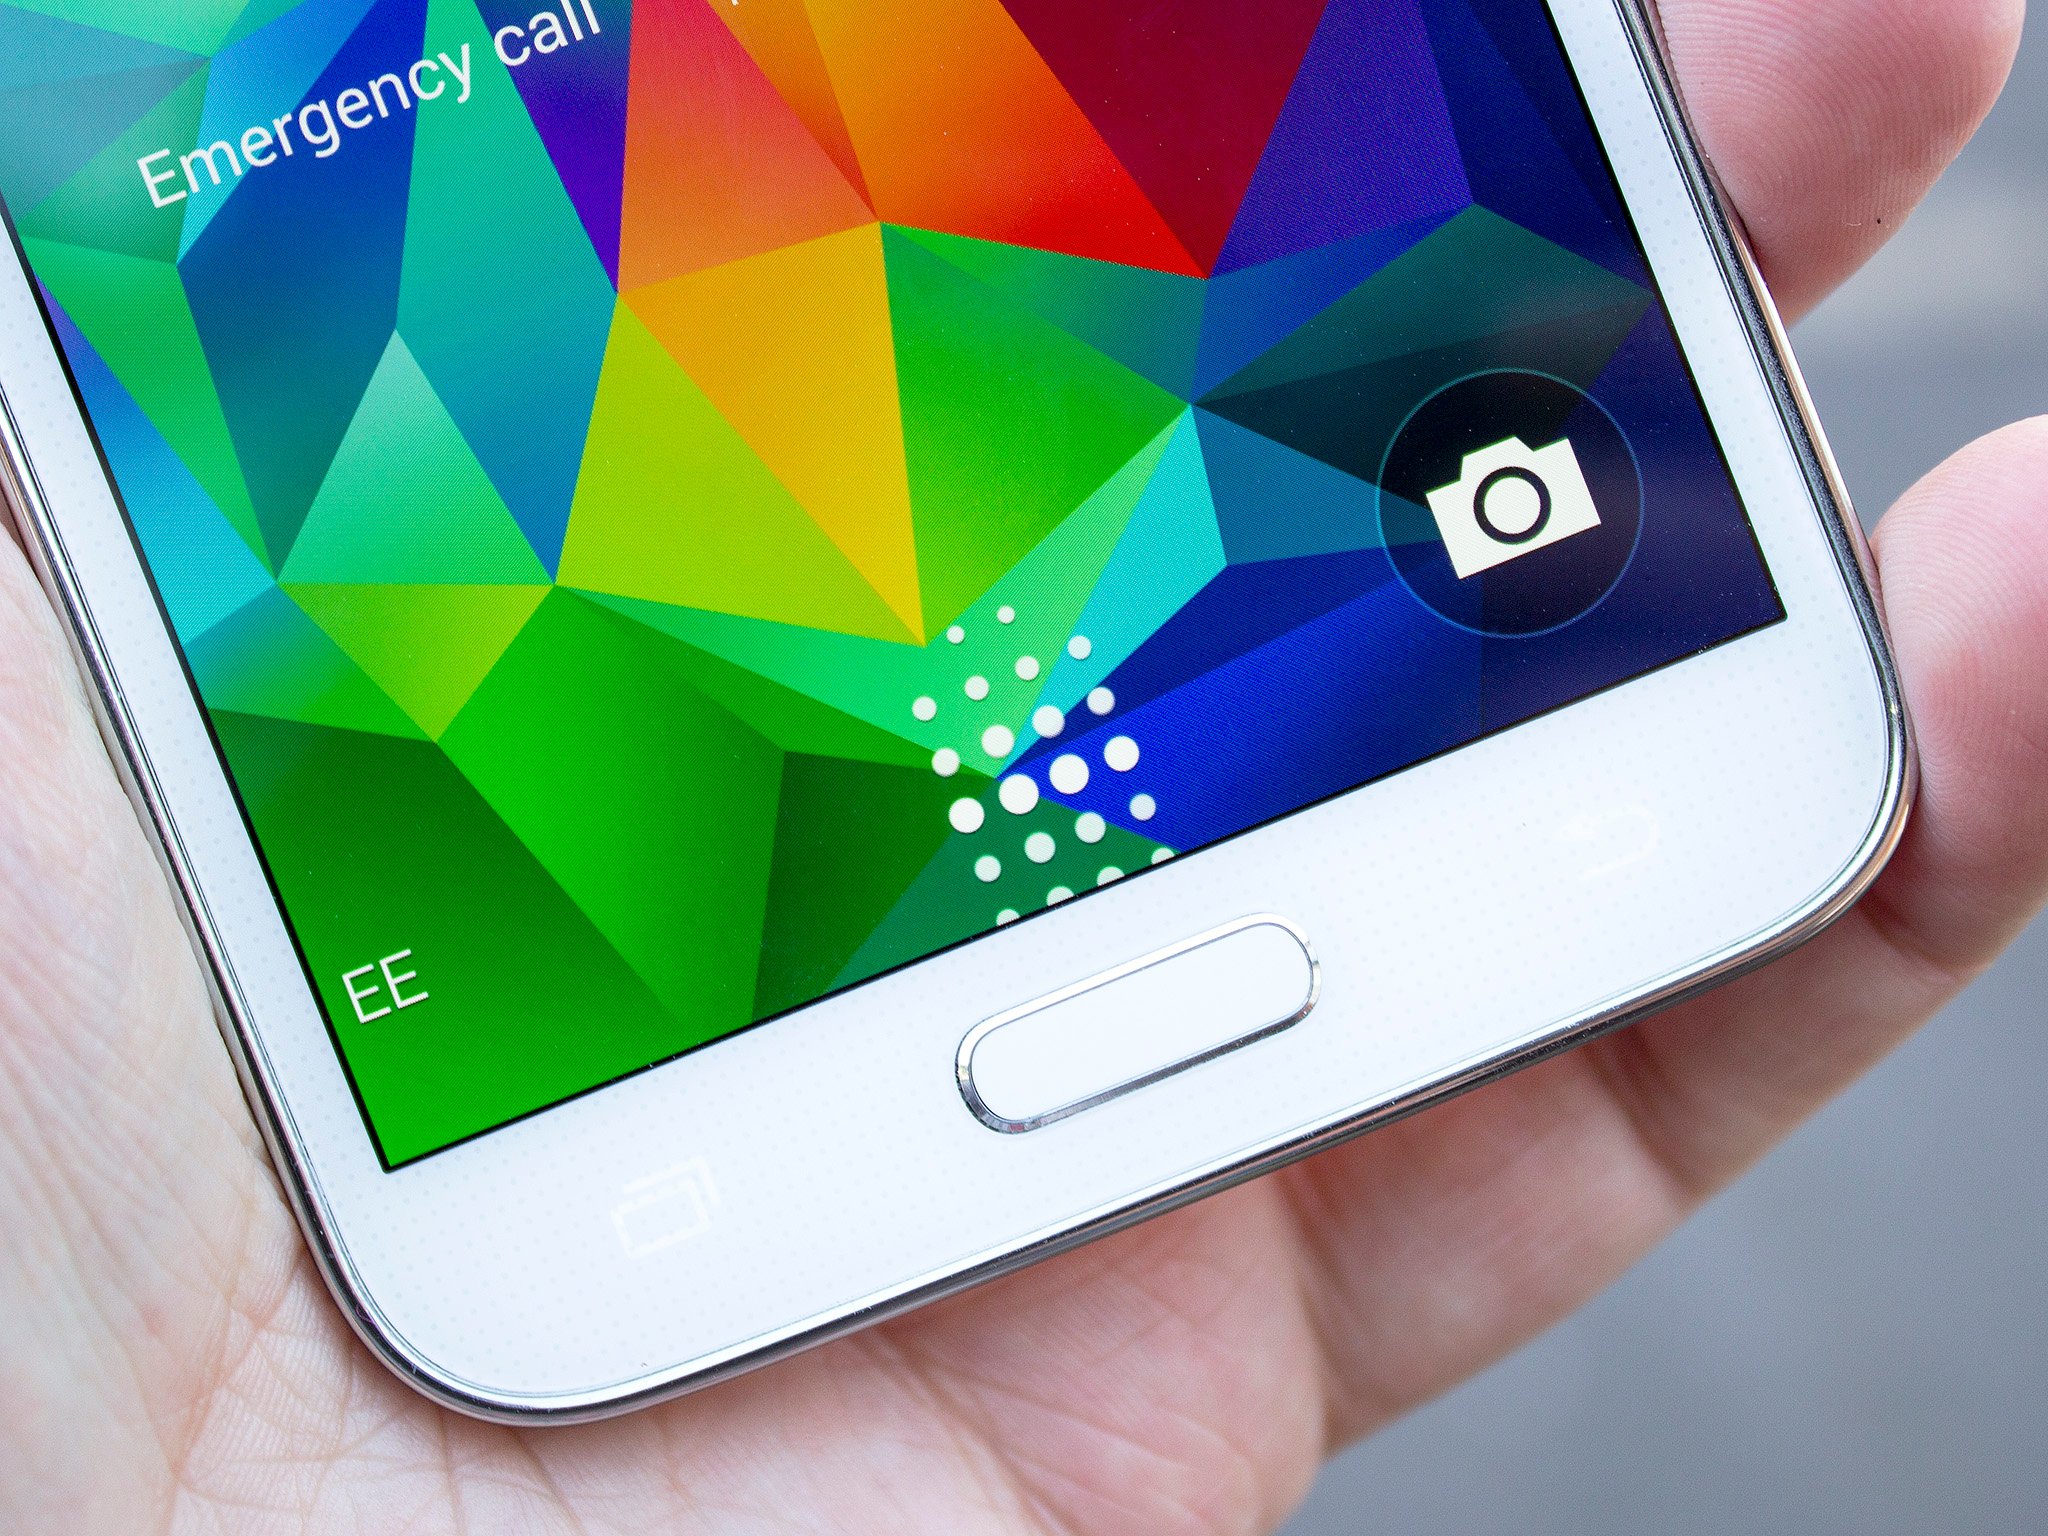 LastPass update adds support for Galaxy S5's fingerprint scanner